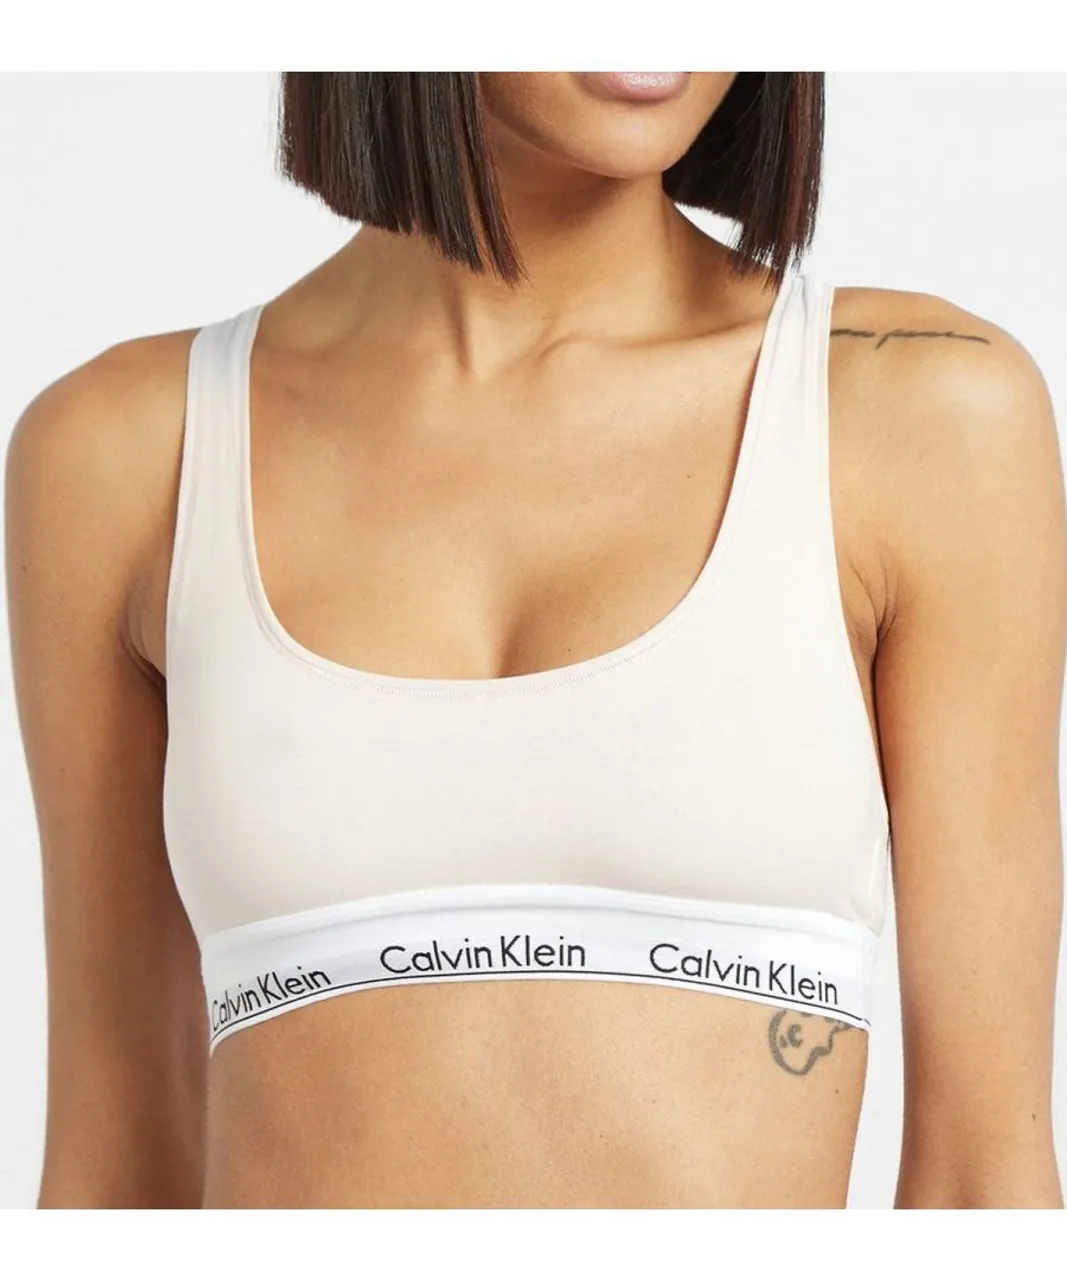 Calvin Klein Womens 0000F3785E Modern Cotton Bralette Bra - Pink